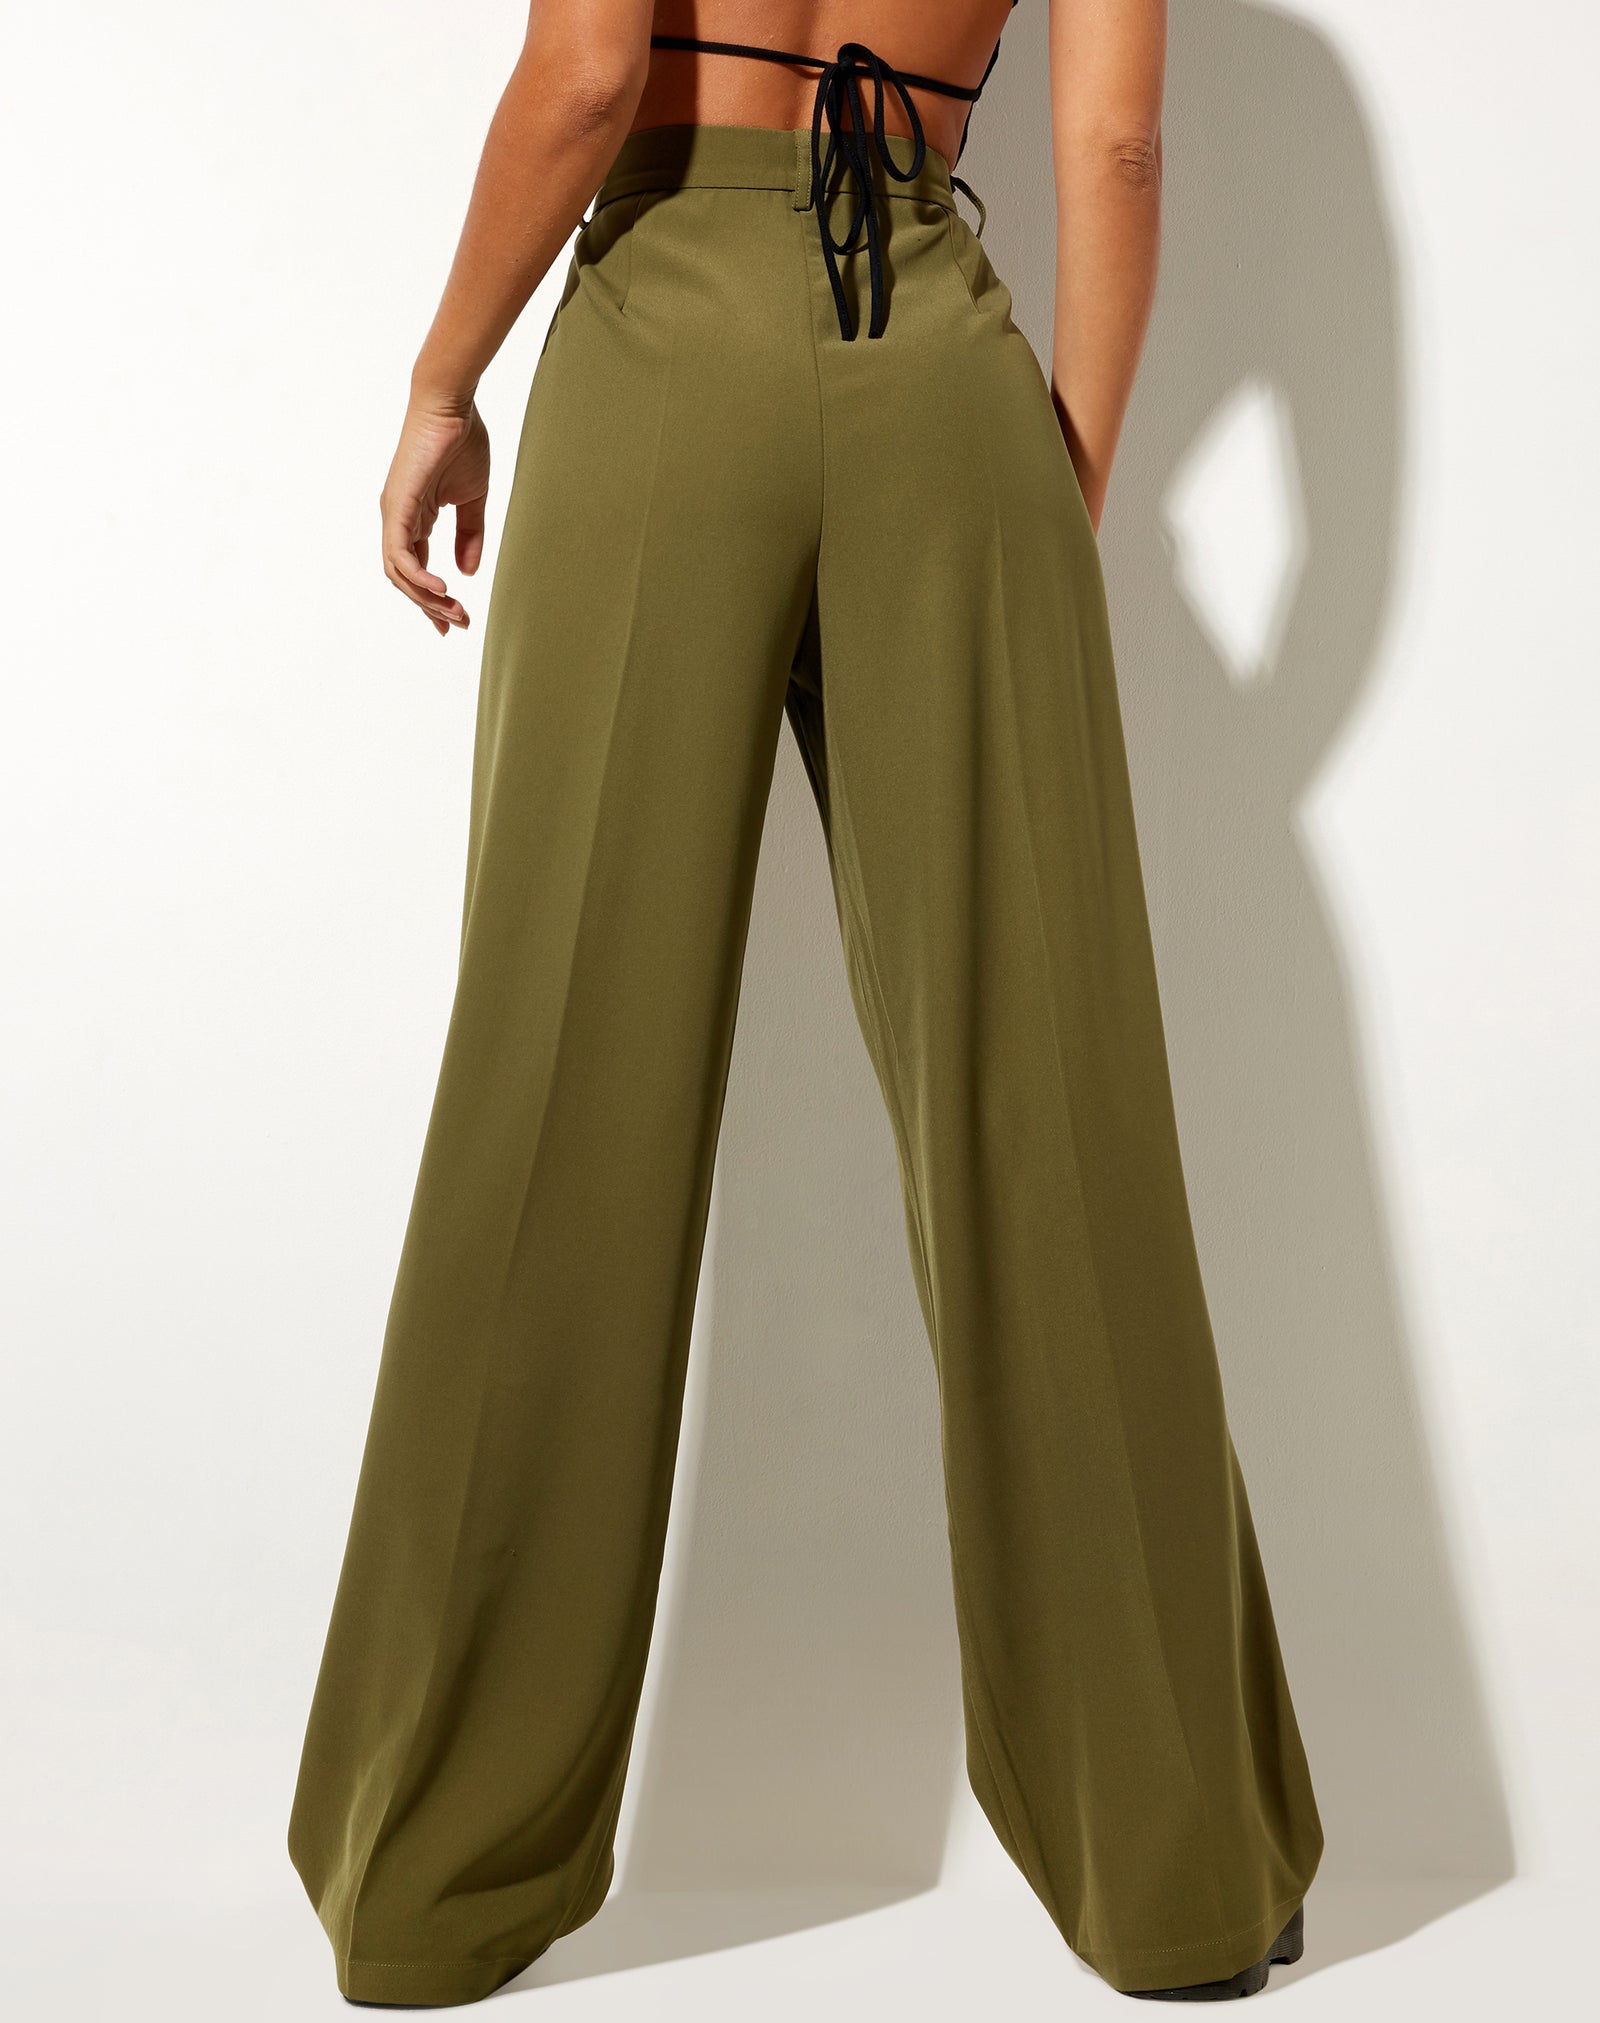 Junice Trousers - Tailored Pleated Elastic Waist Trousers in Khaki | Showpo